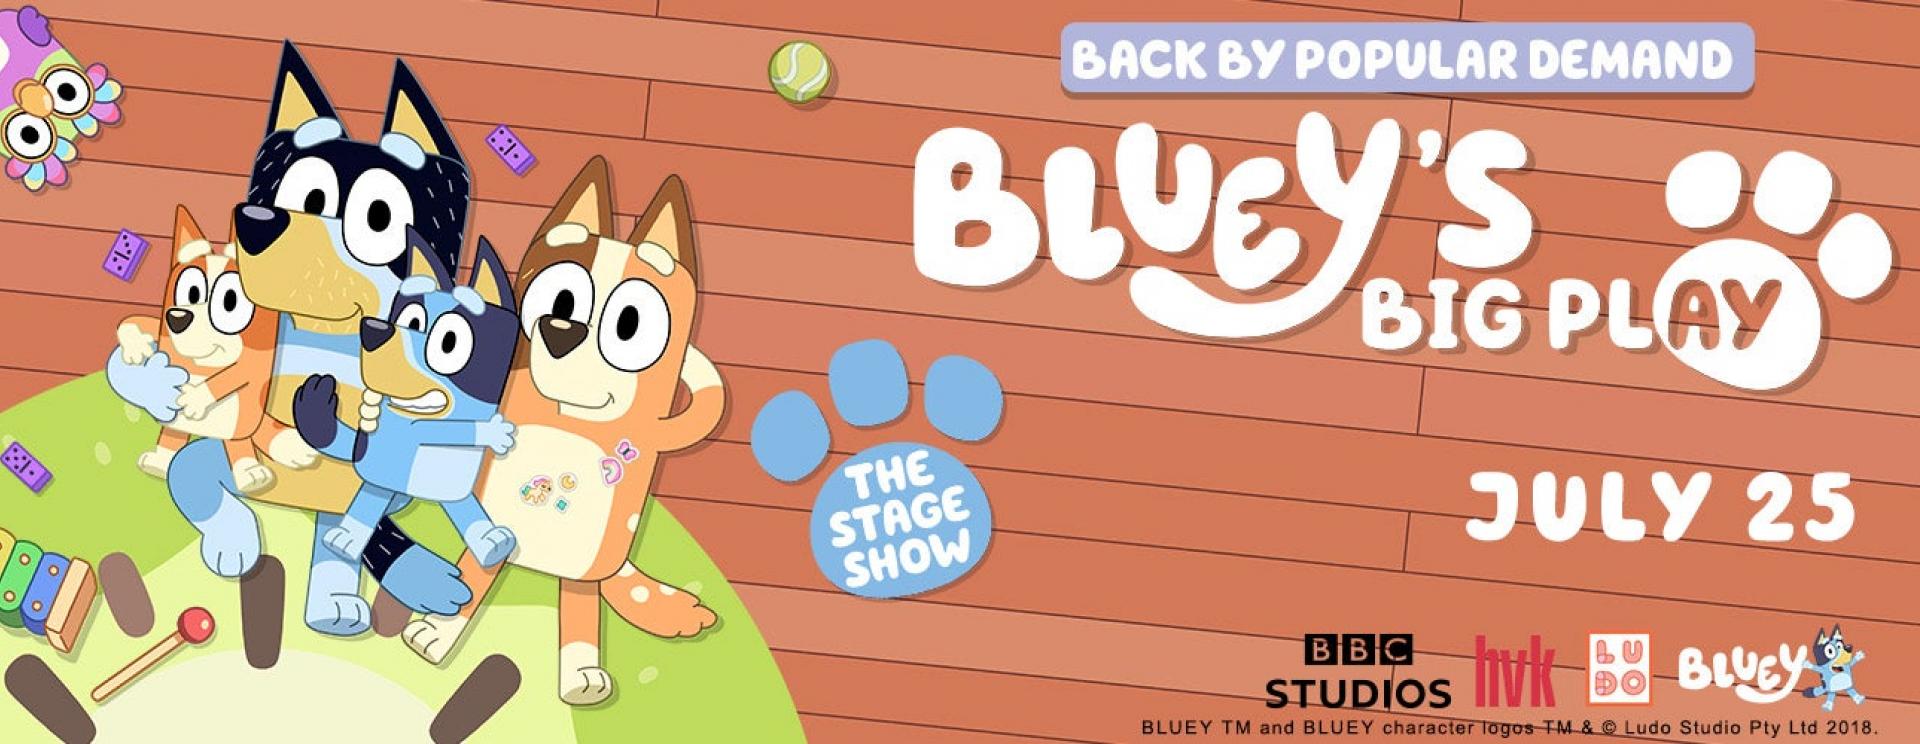 Bluey's Big Play 